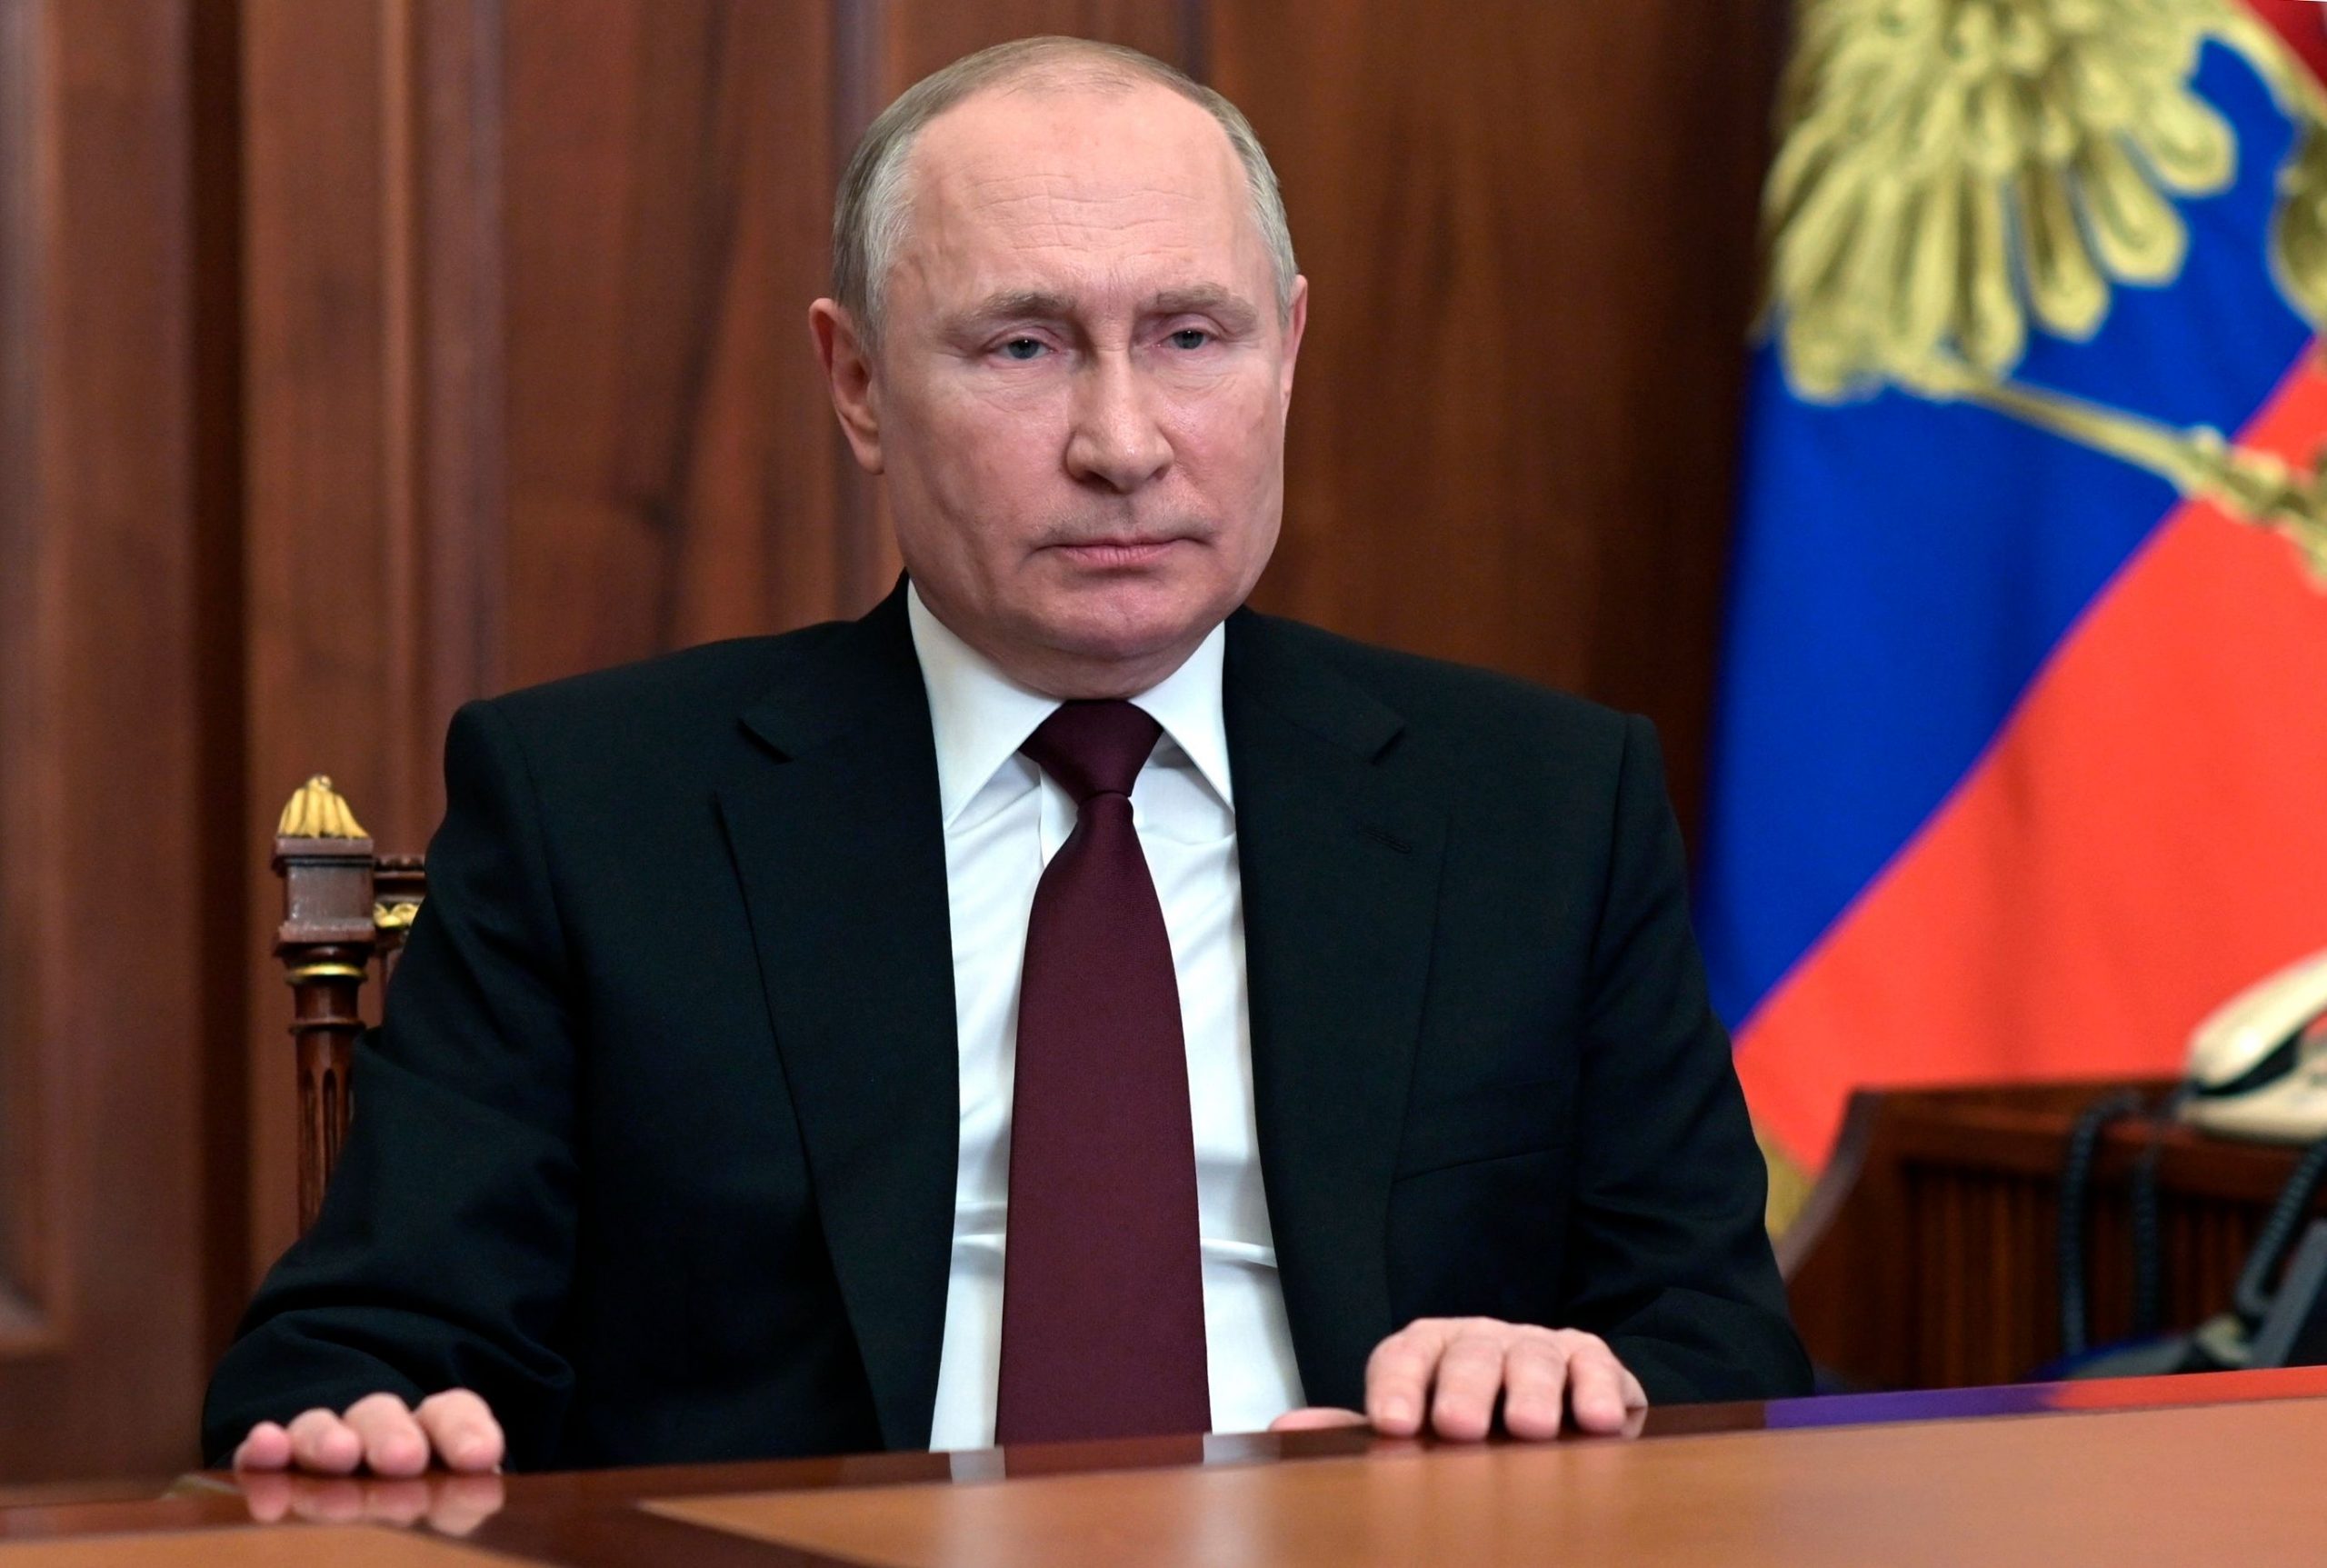 Ukraine war: Vladimir Putin a ‘murderous dictator, pure thug’, says Joe Biden